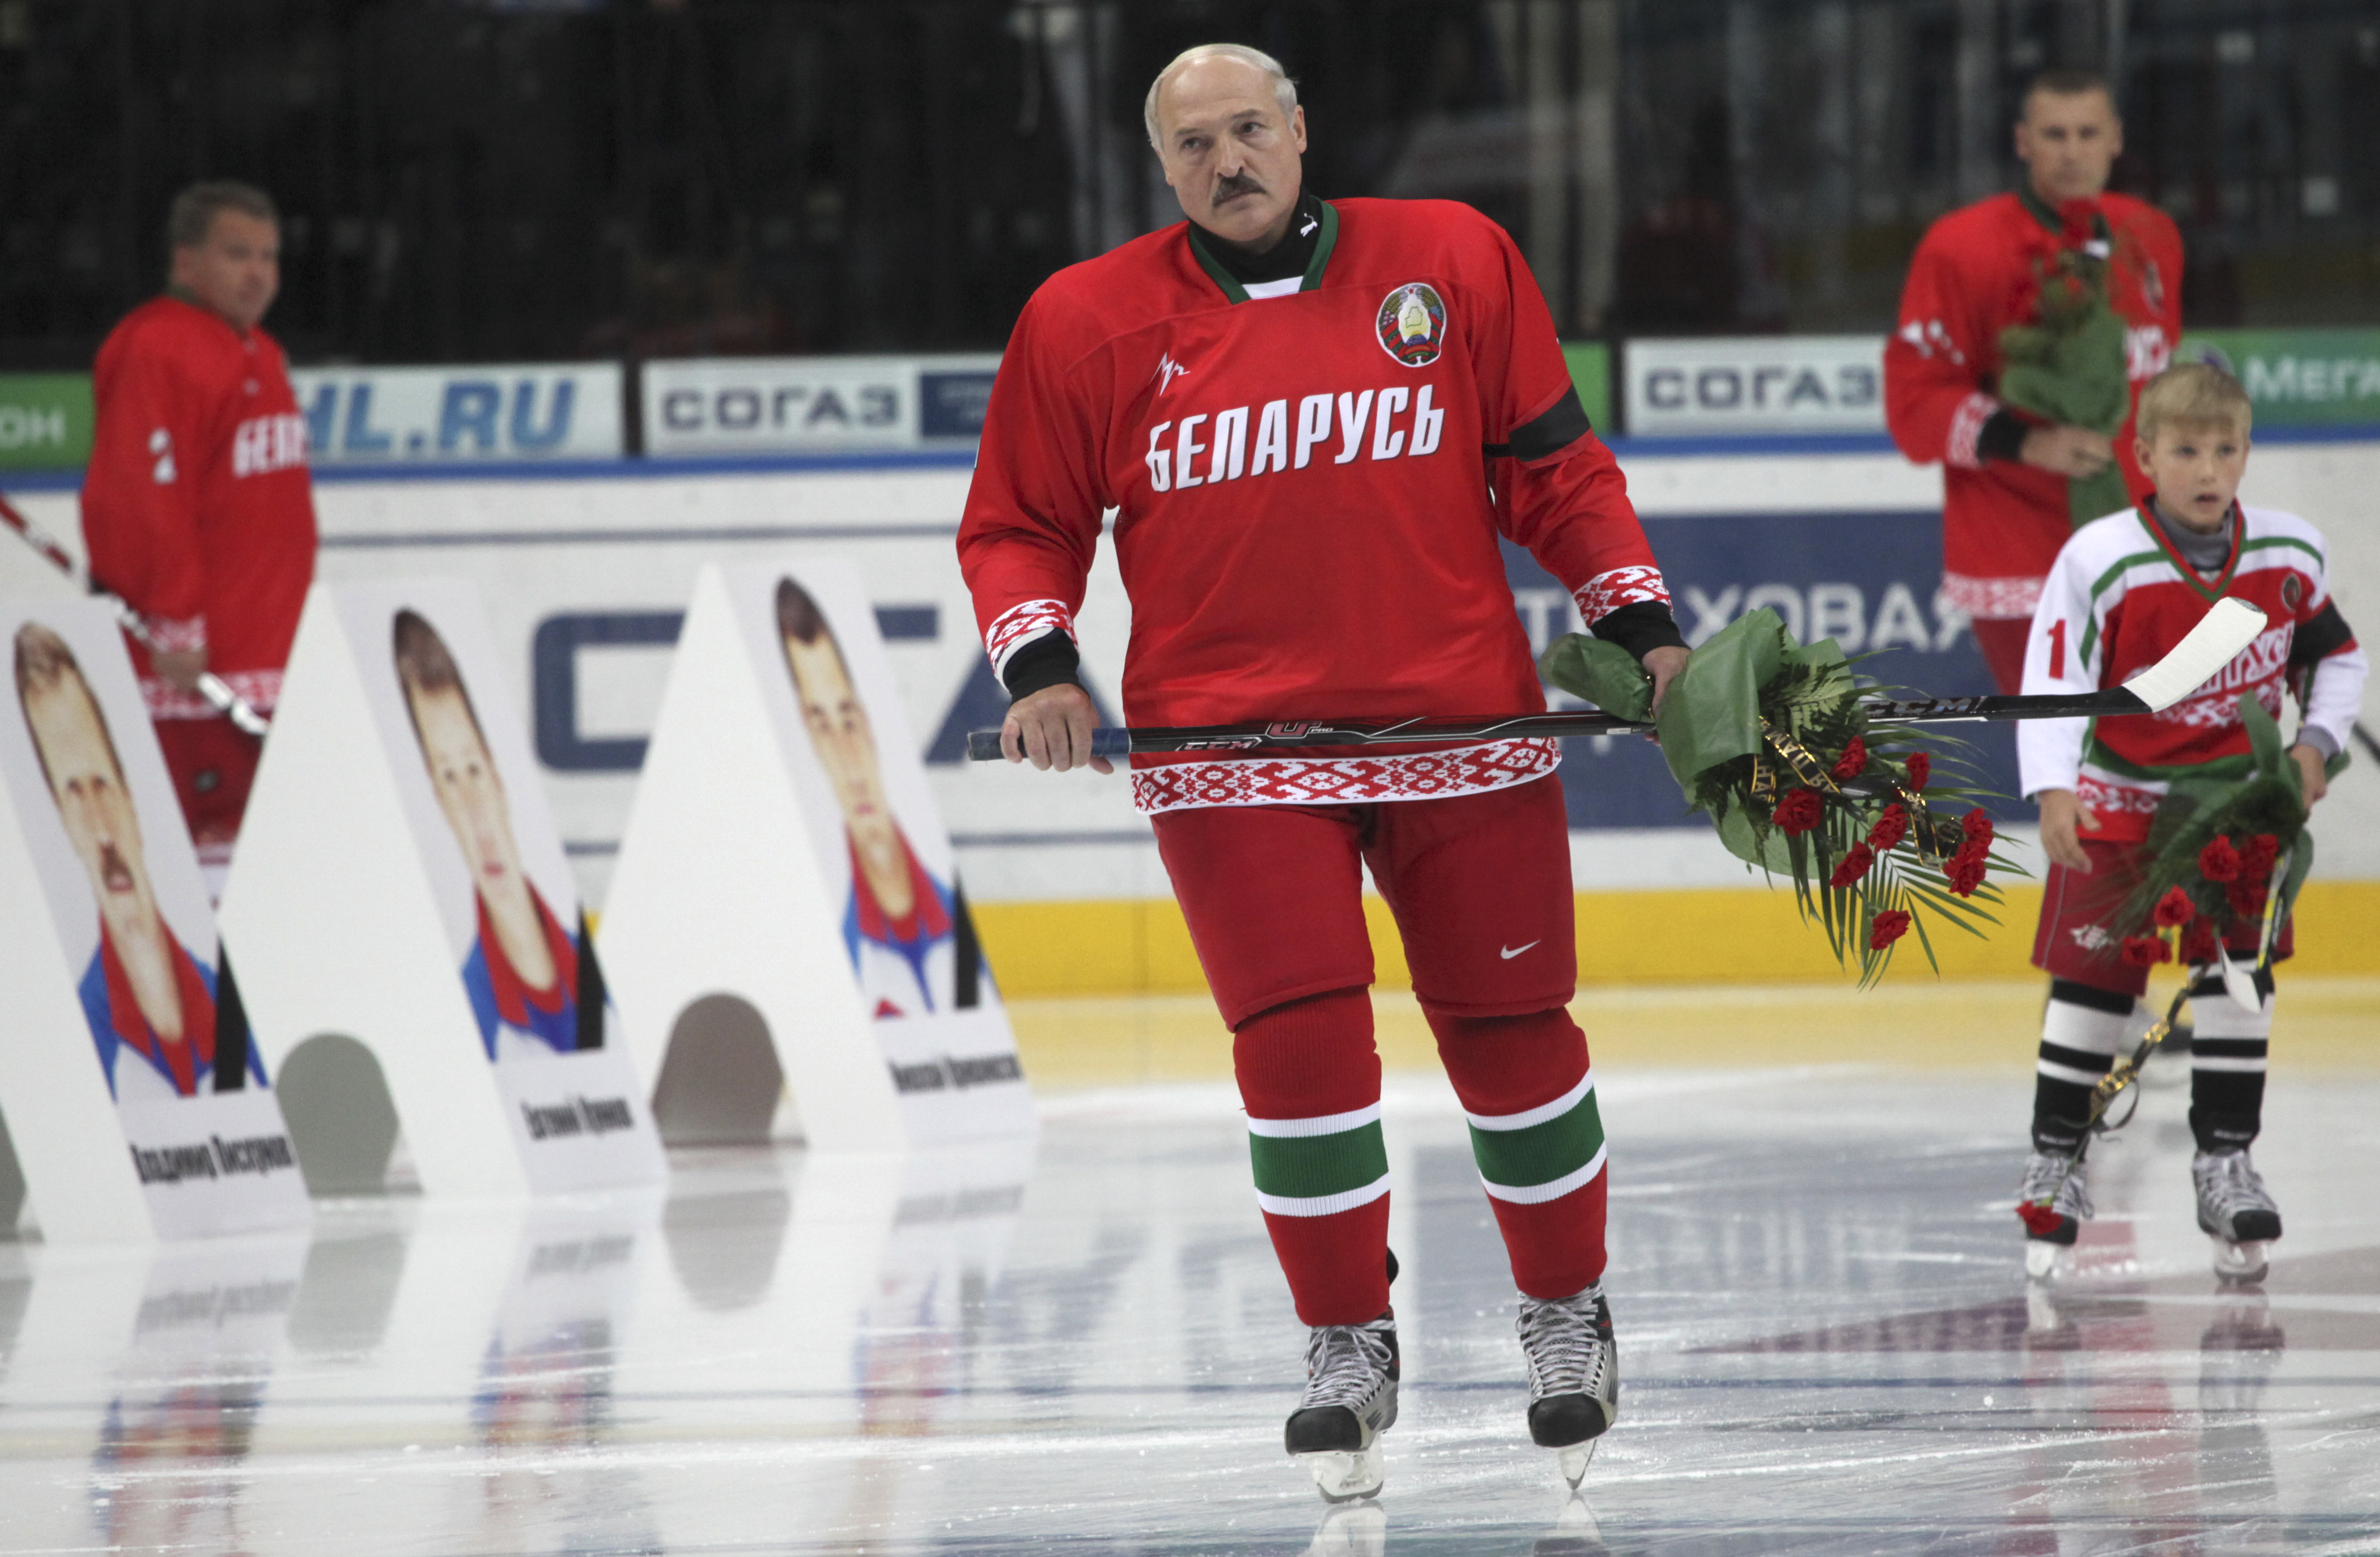 Vitryske presidenten Aleksandr Lukasjenko deltog också i ceremonin.